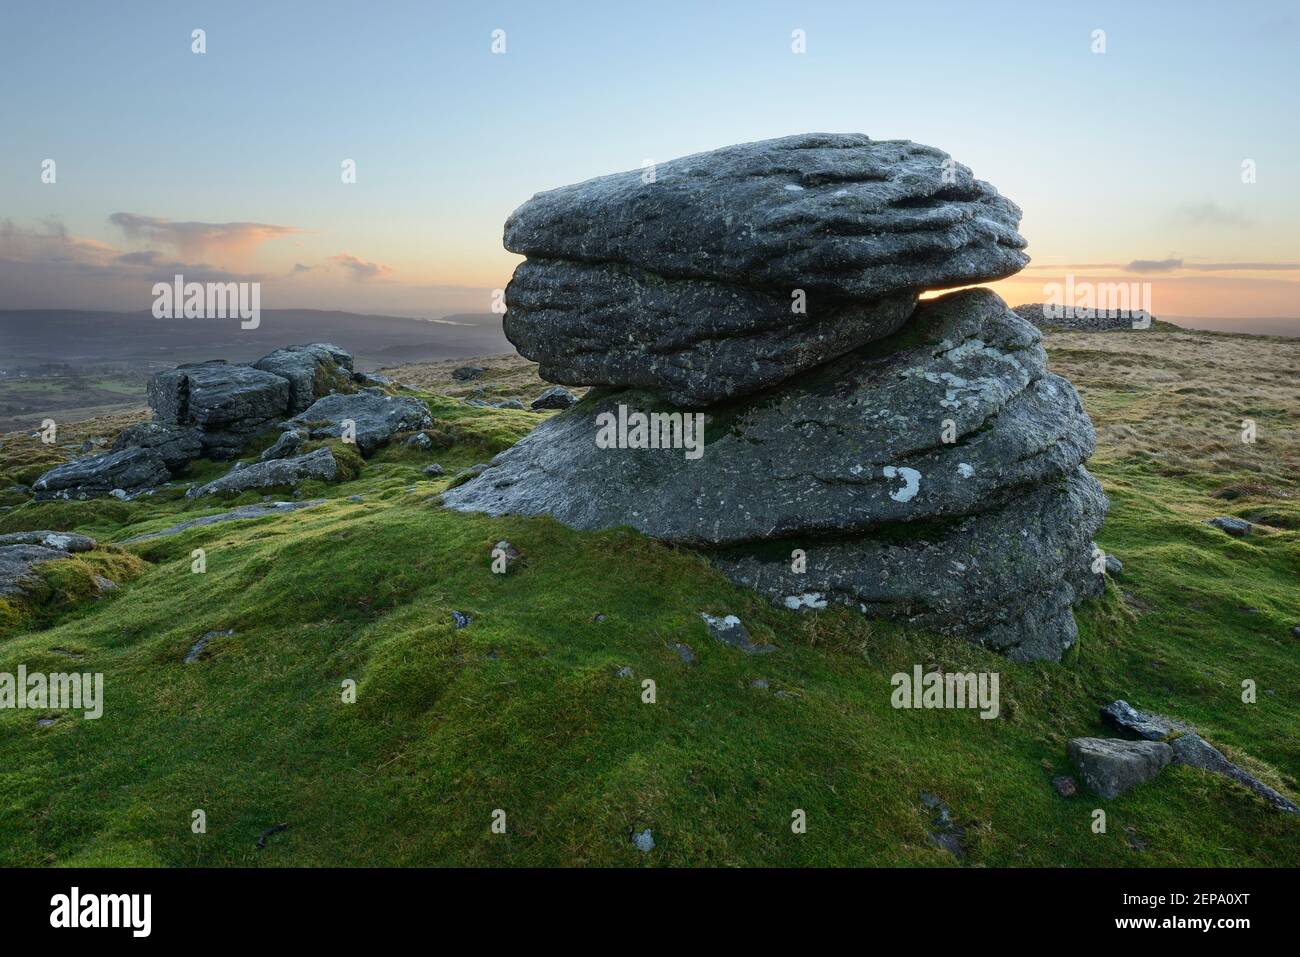 A distinctive stack of rocks at Rippon Tor, Dartmoor, UK. Stock Photo